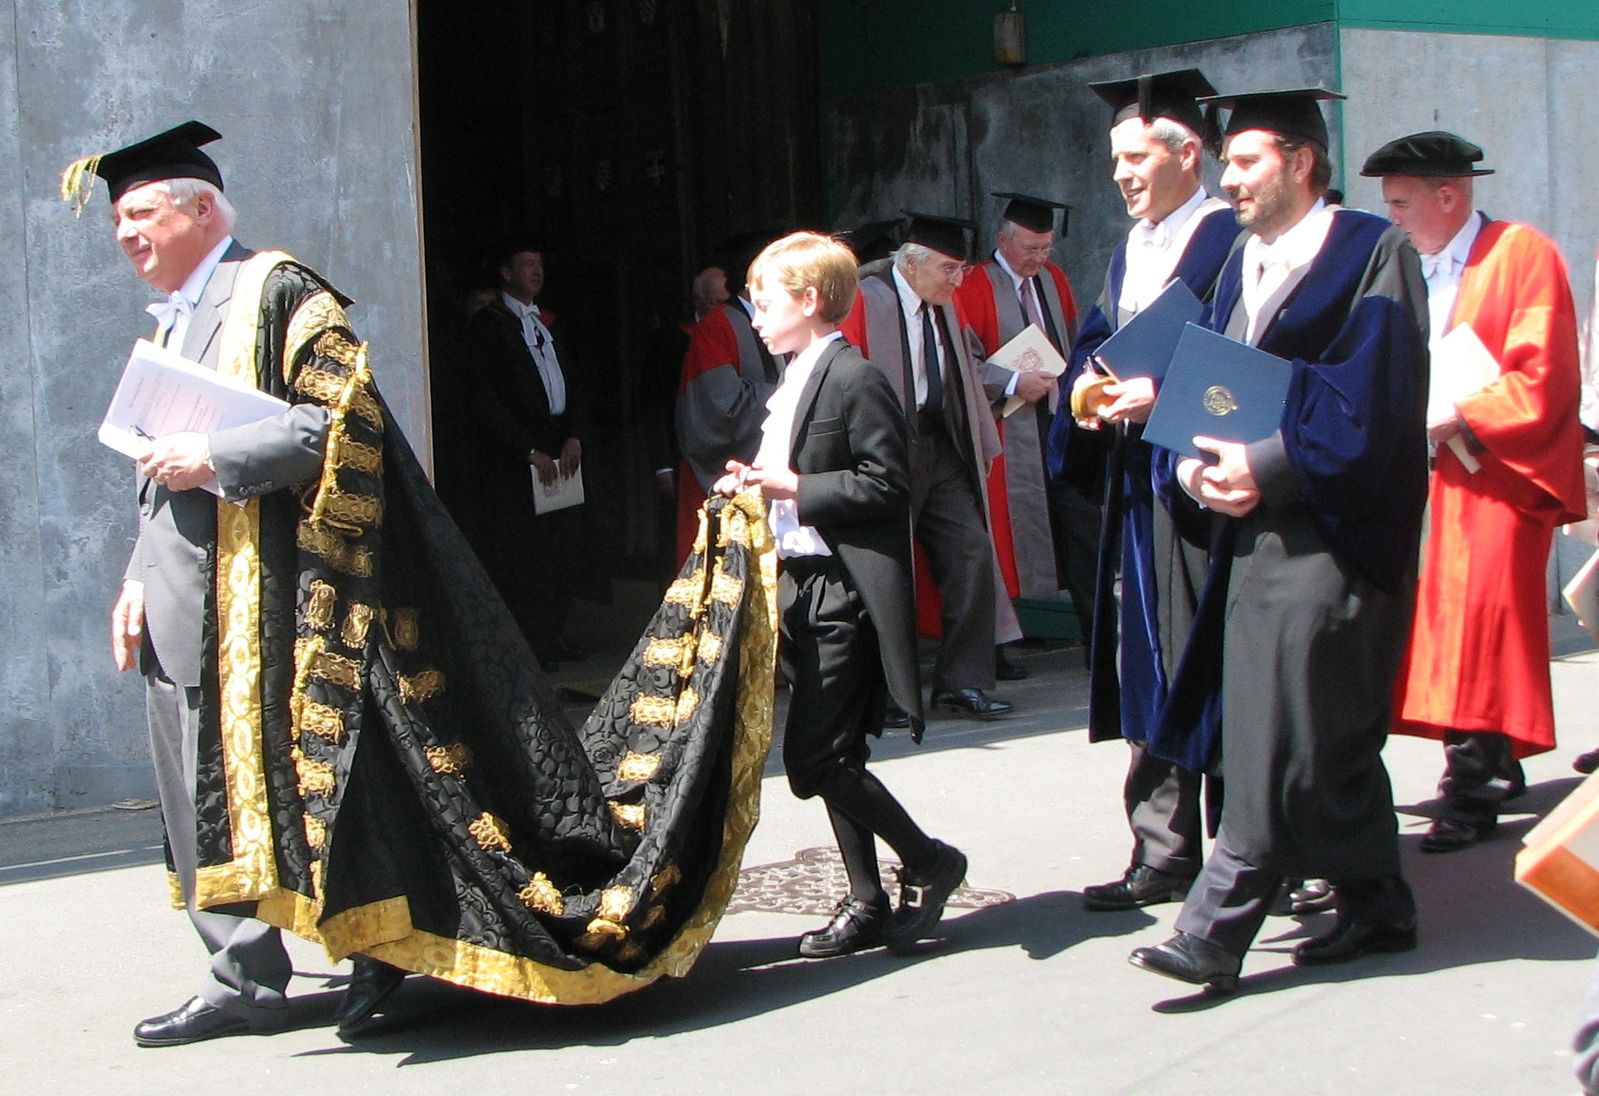 Christ Patten leaves the Sheldonian Theatre following Encaenia (2009)